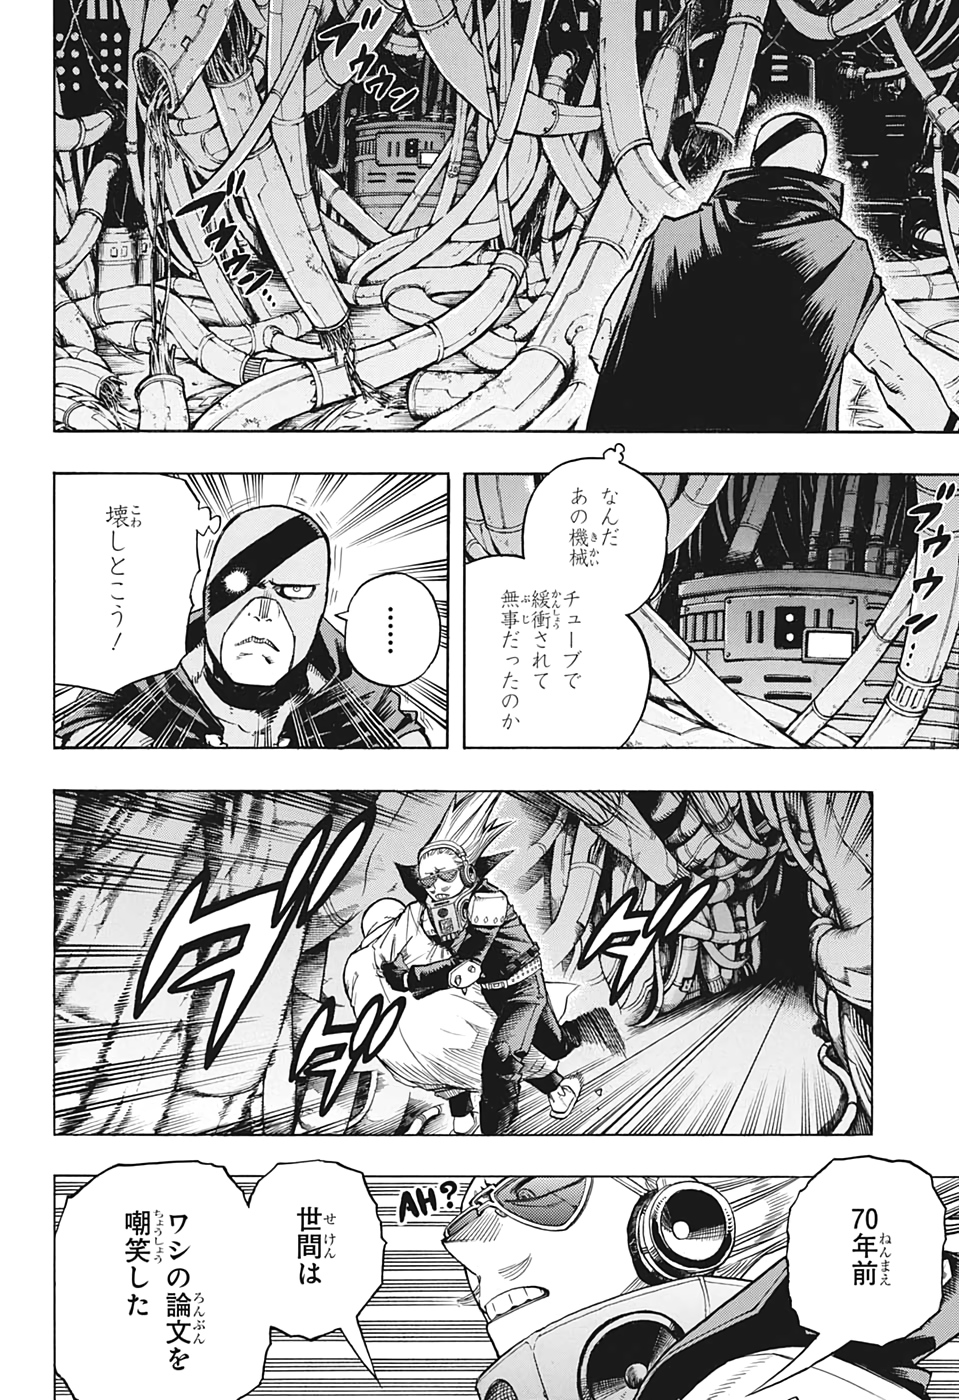 Boku no Hero Academia - Chapter 270 - Page 2